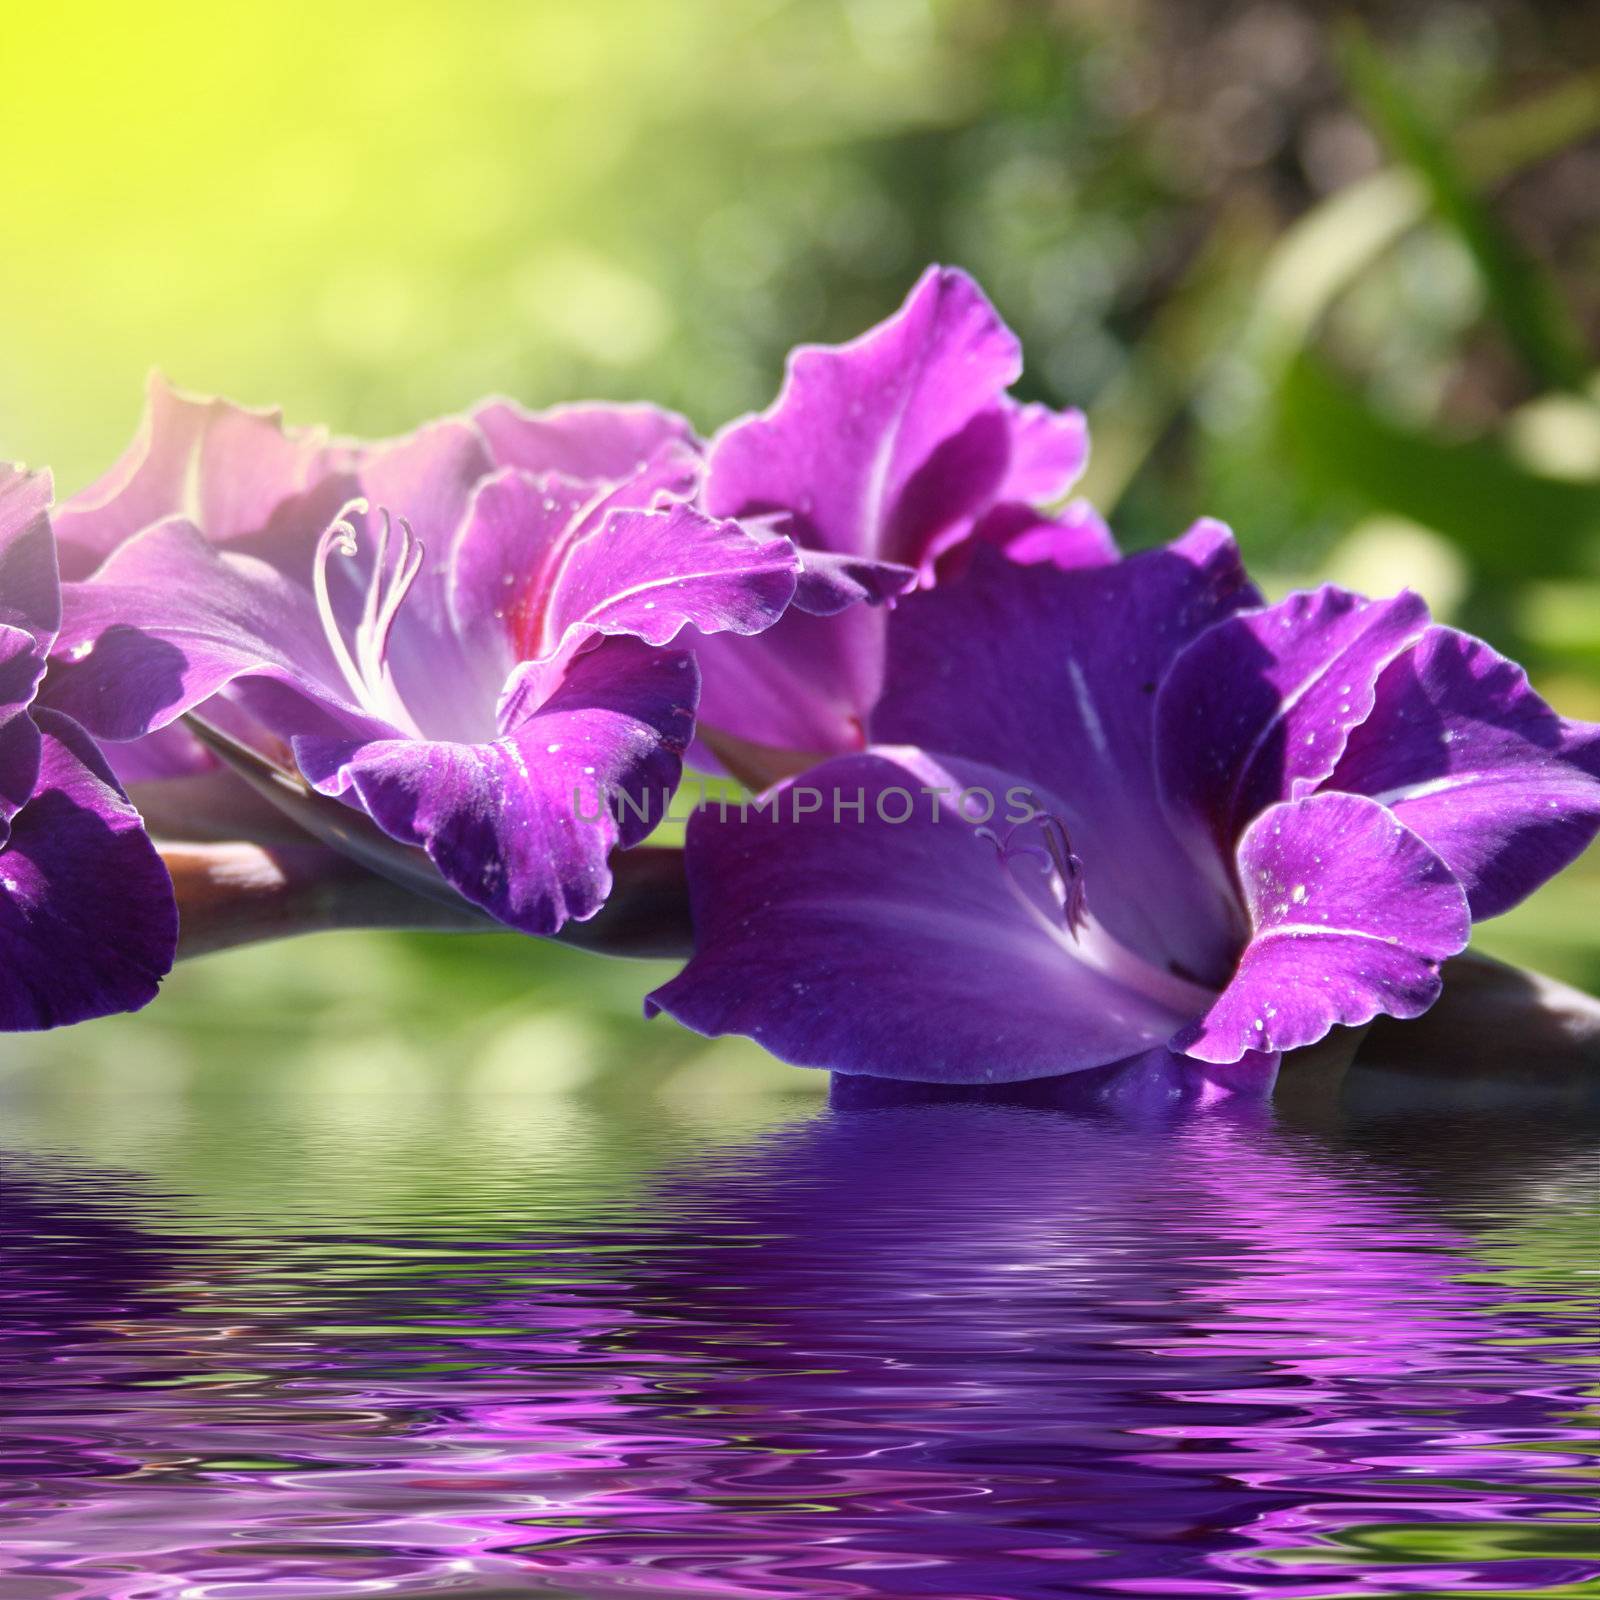 Beautiful purple gladioli in the summer